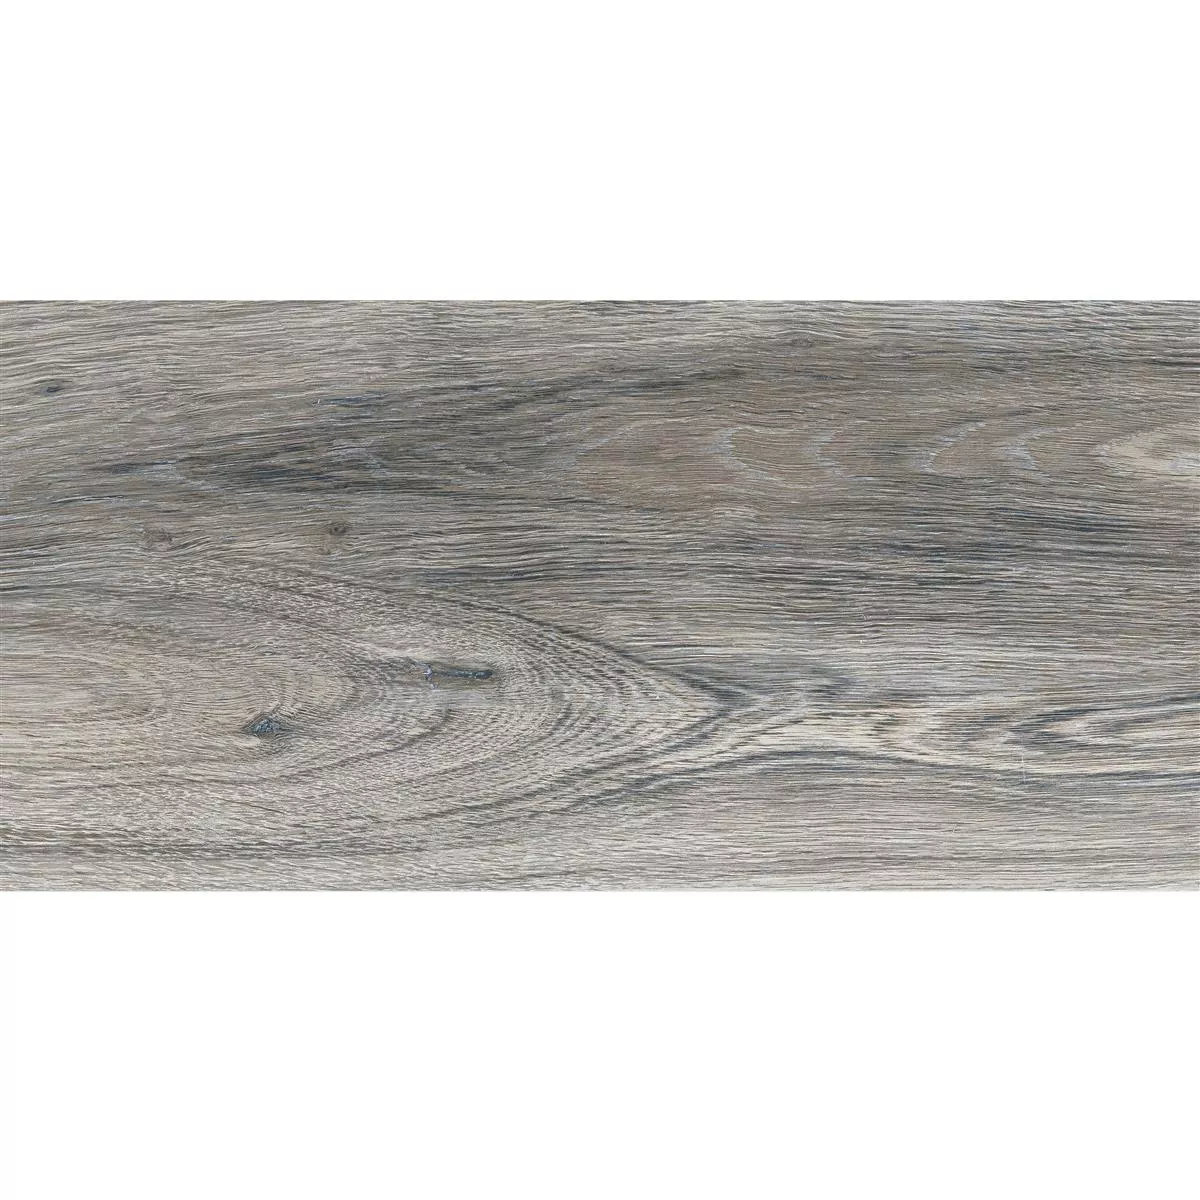 Sample Floor Tiles Goranboy Wood Optic Ash 30x60cm / R10